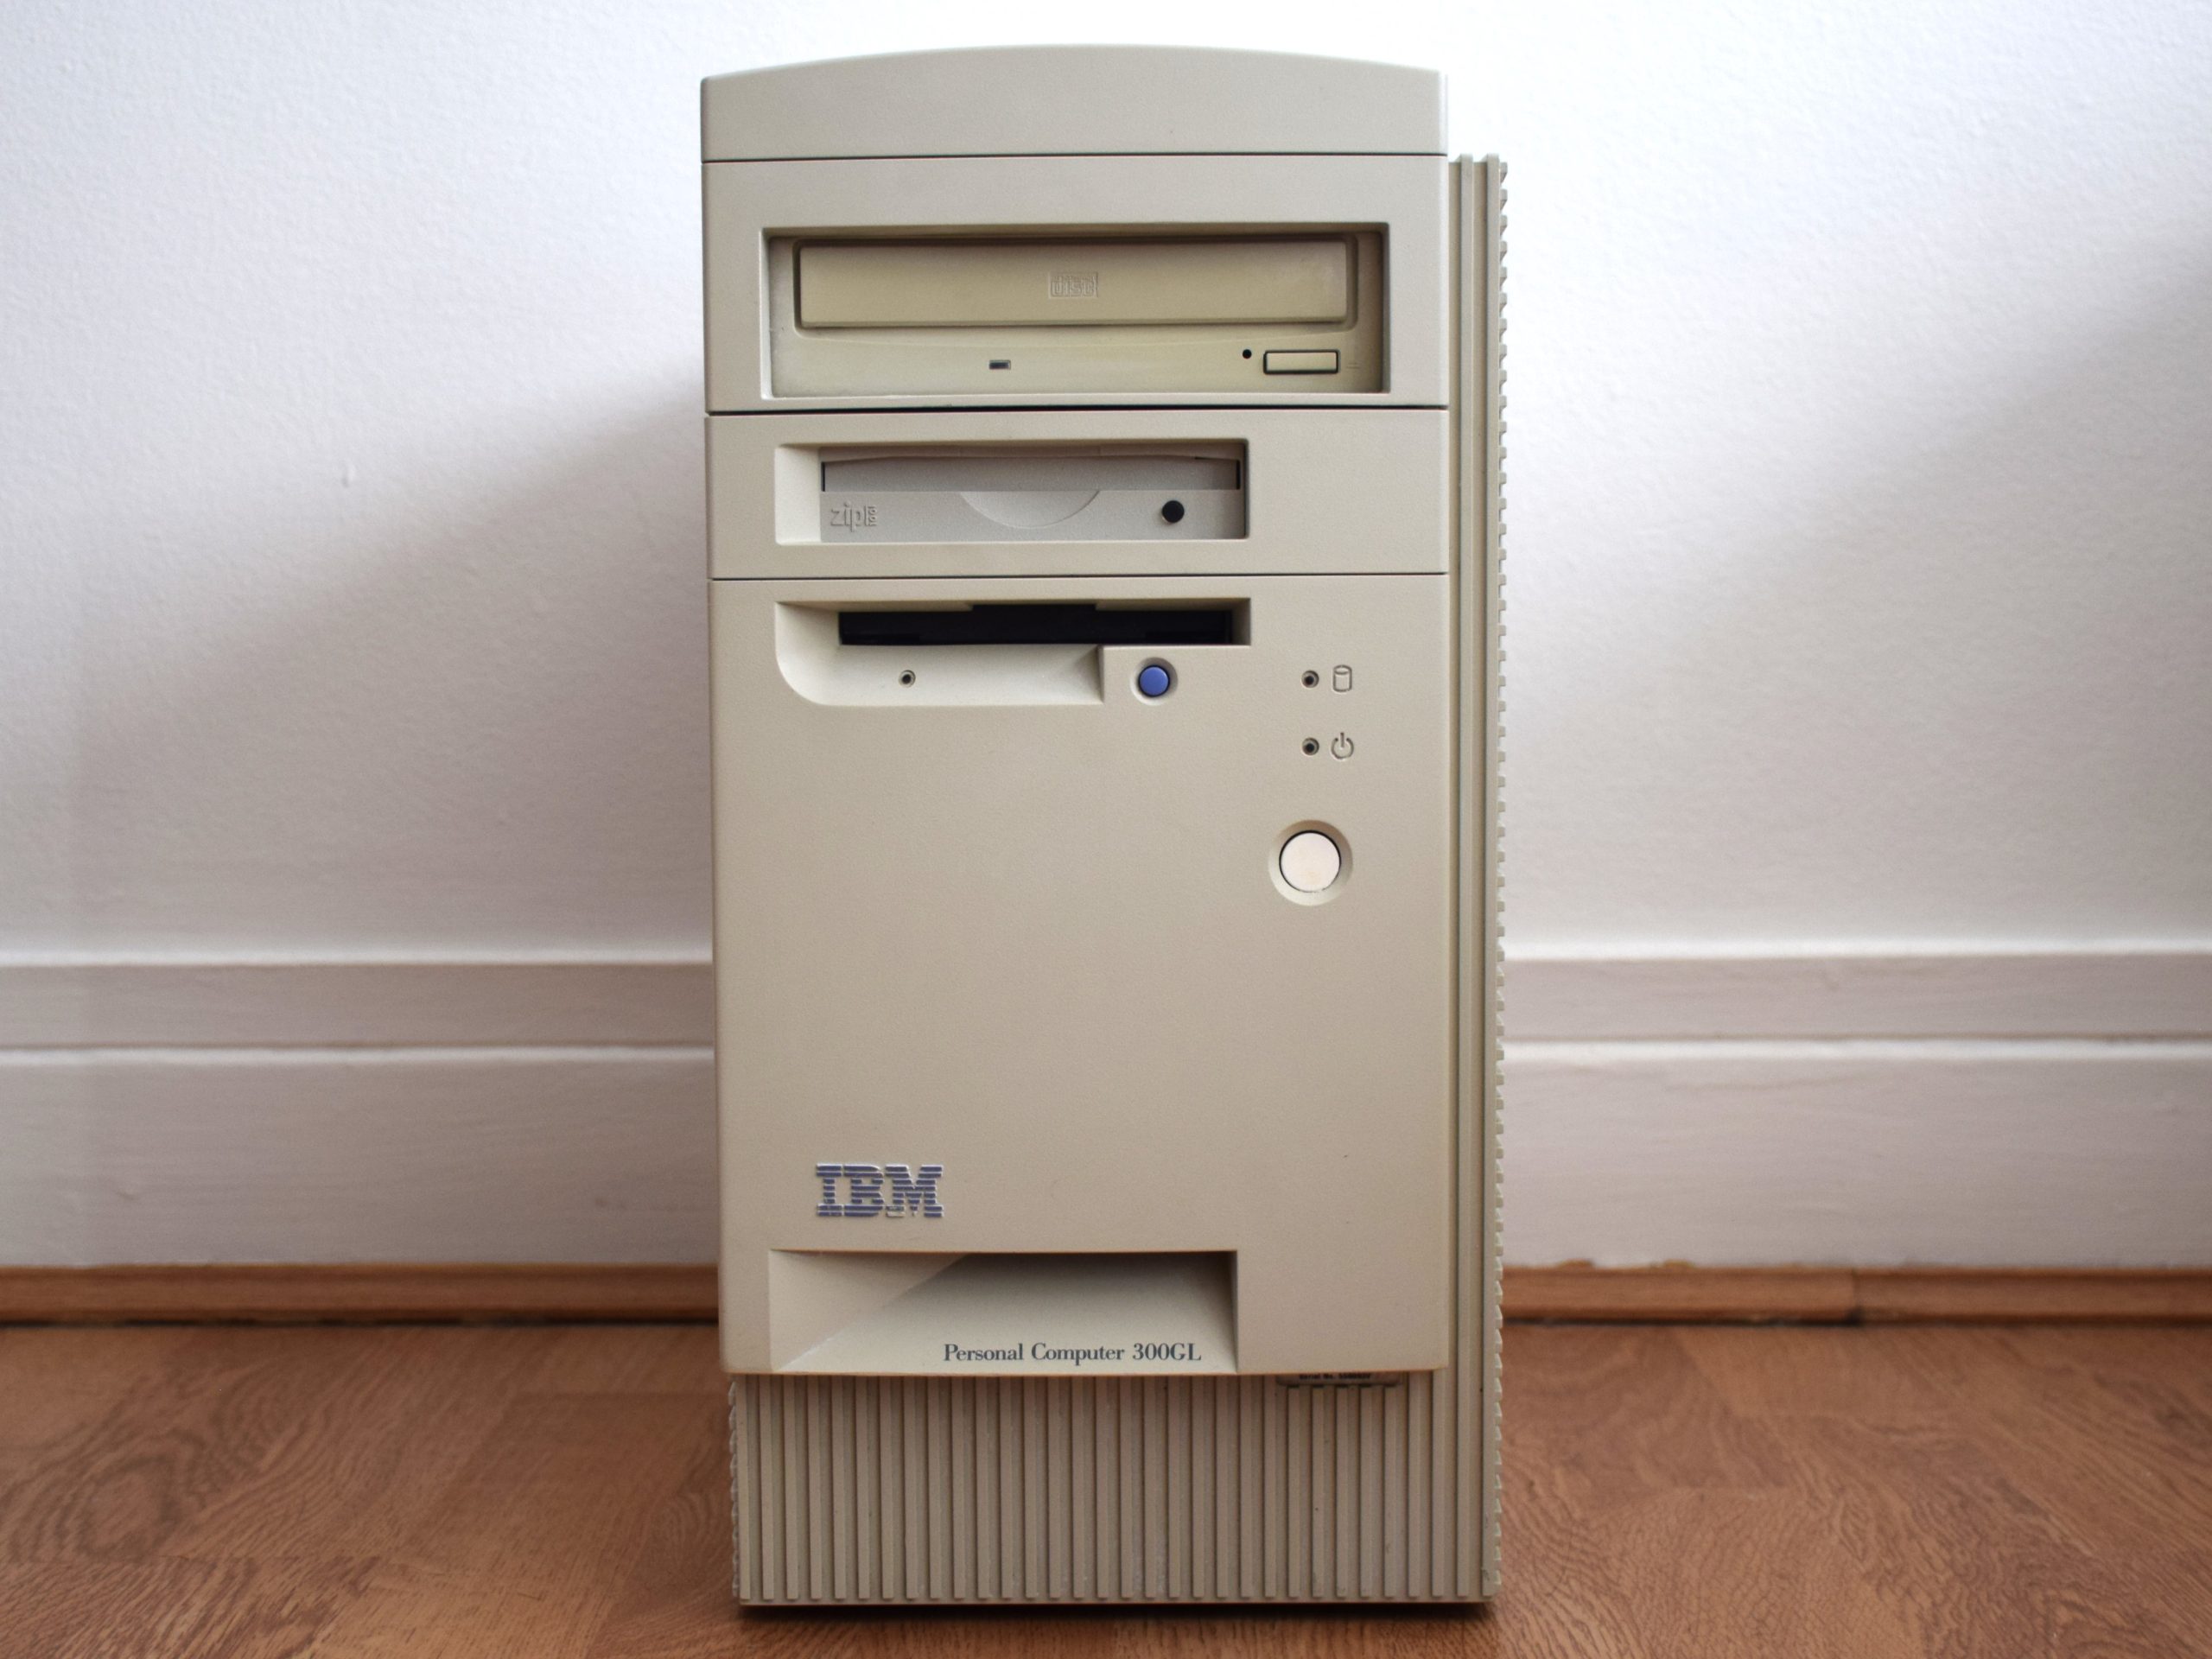 IBM PC 300GL - face